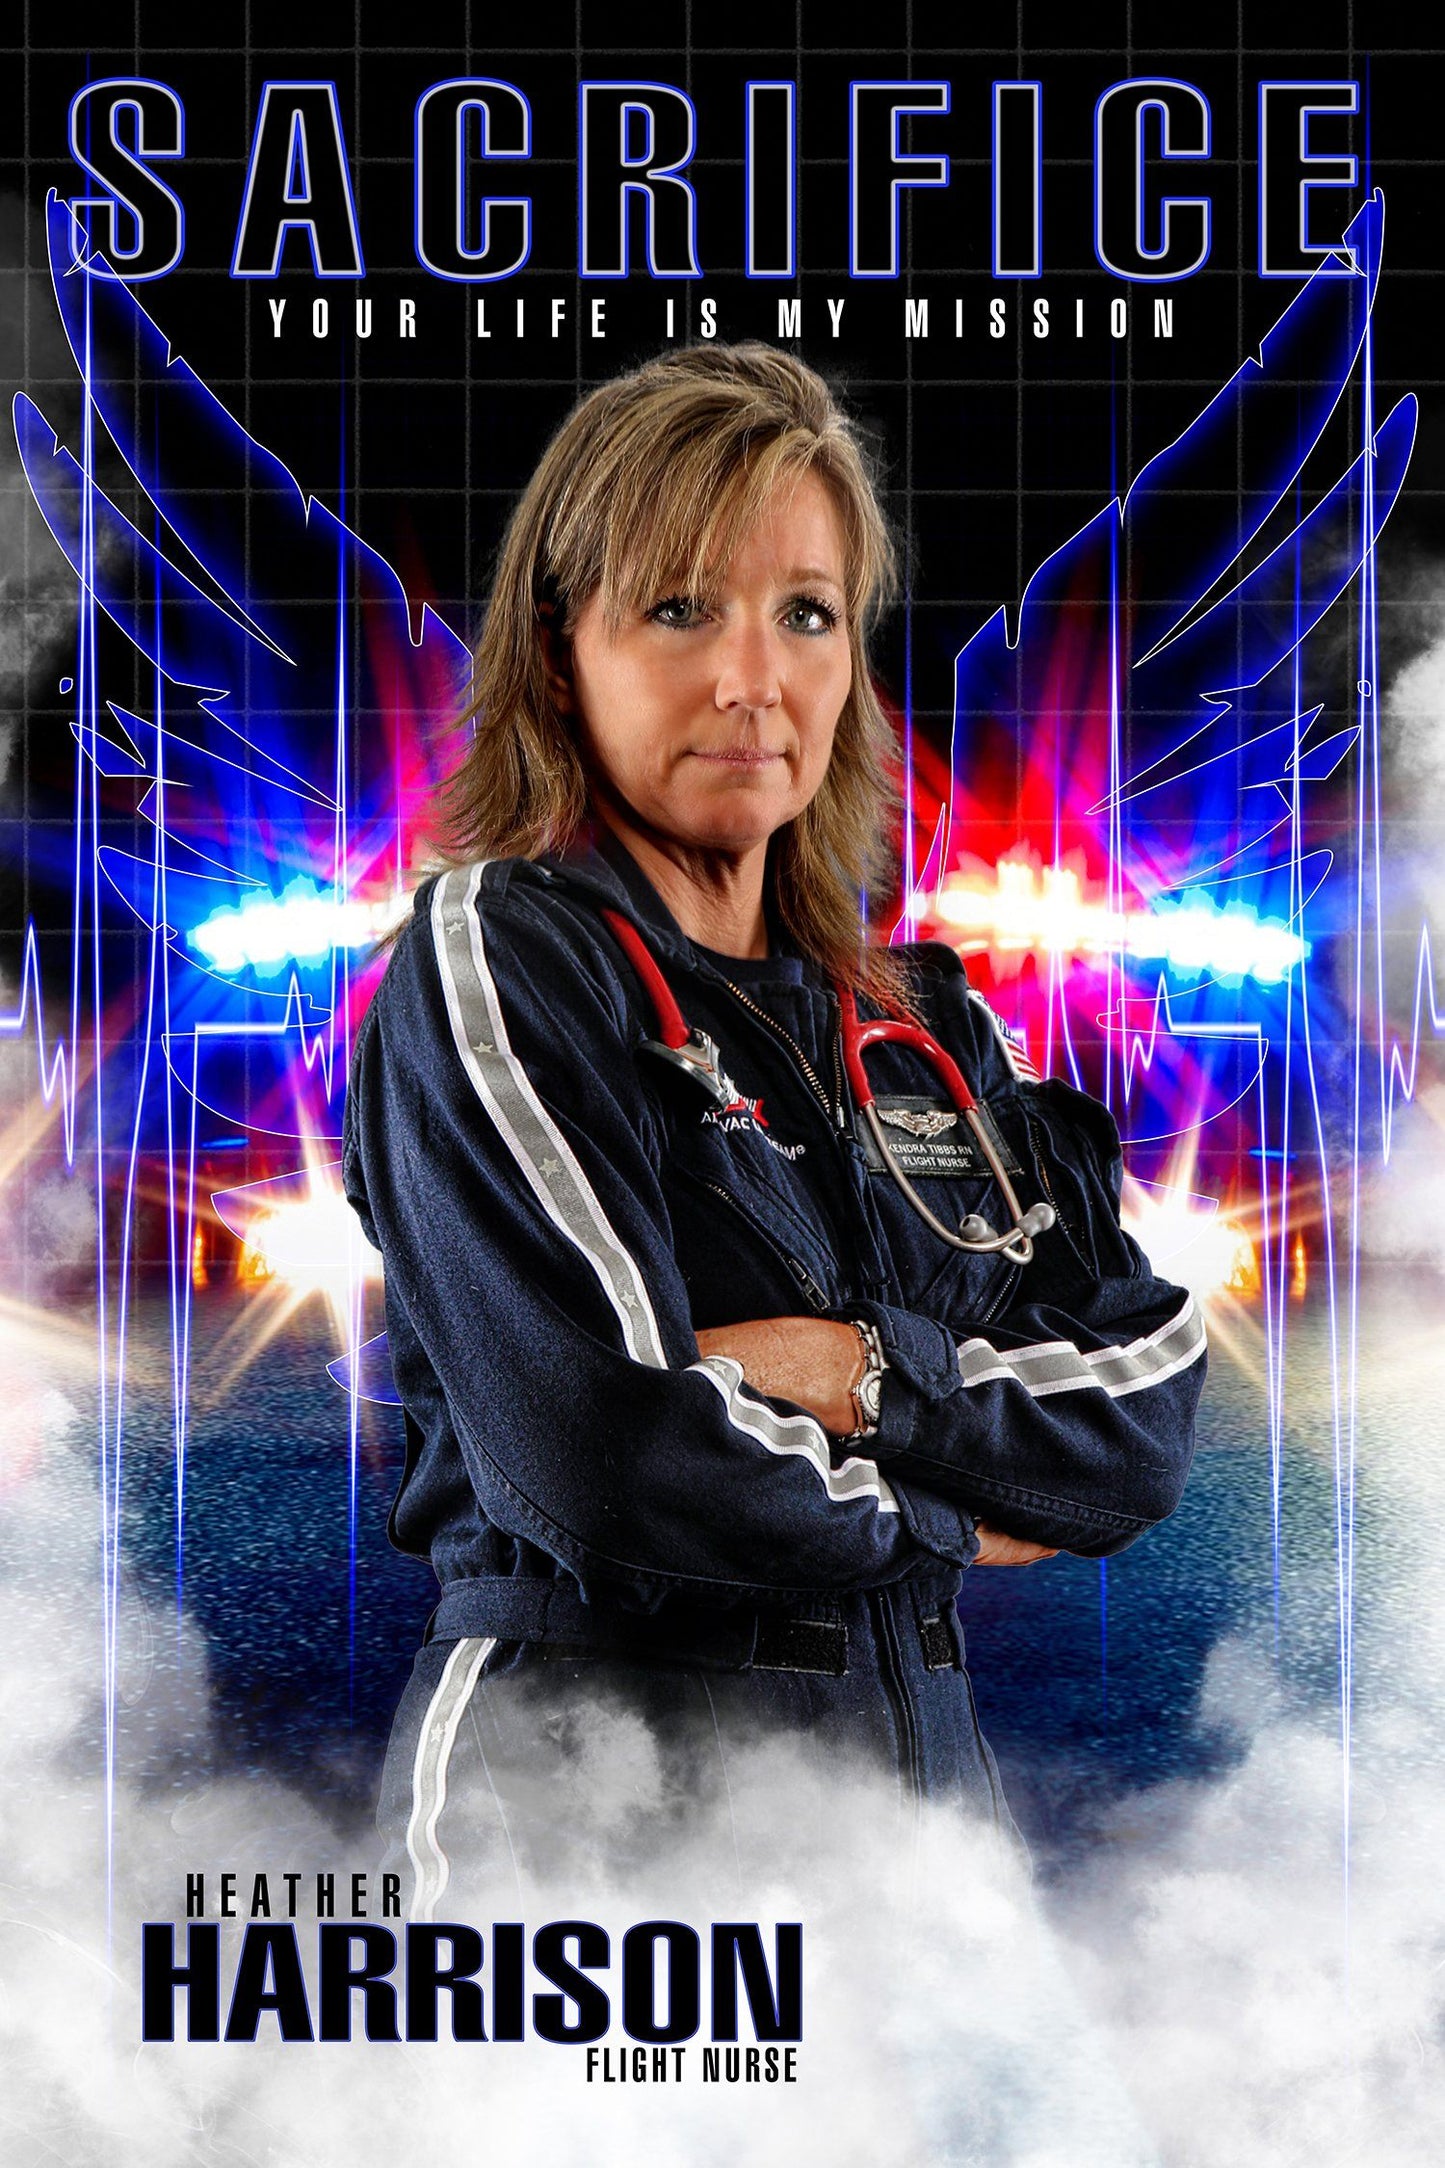 EMT Flight Nurse - V.1 - Heroes Series - Poster/Banner-Photoshop Template - Photo Solutions